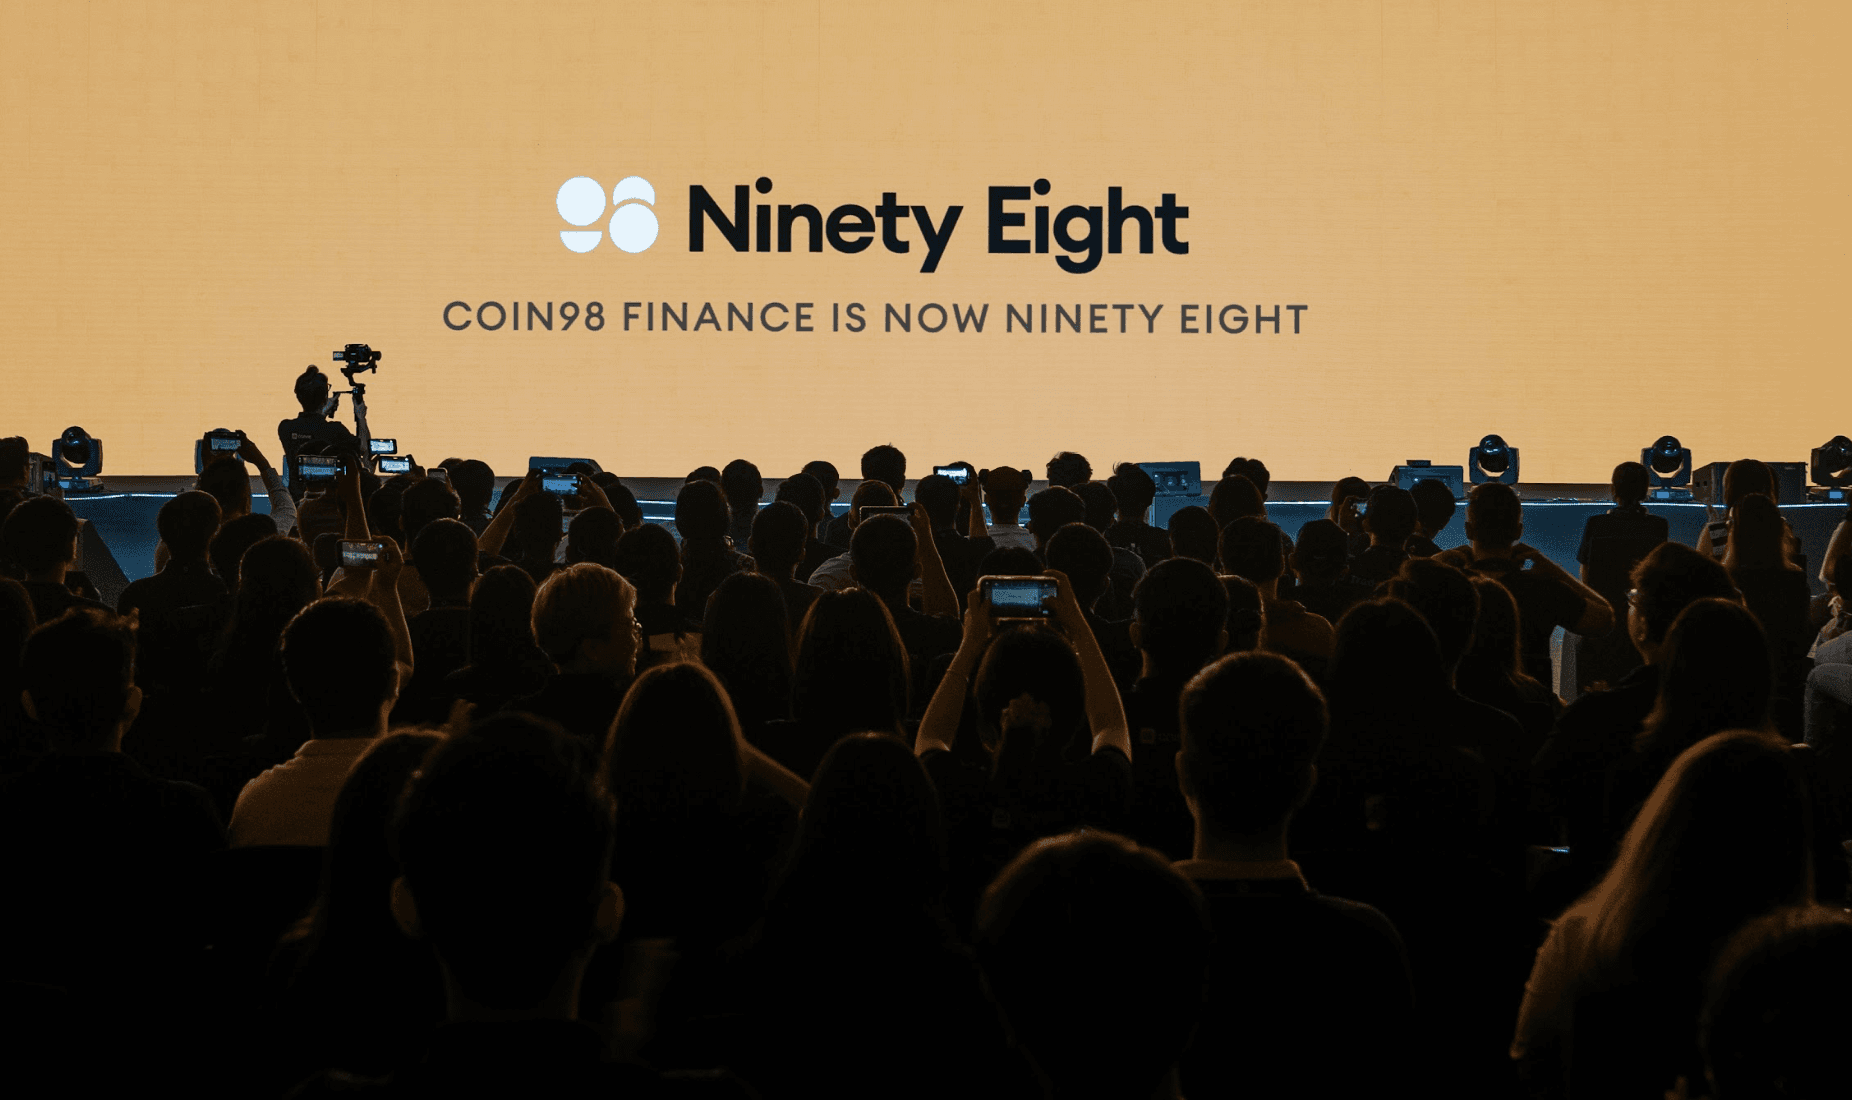 coin98 finance rebranded ninety eight